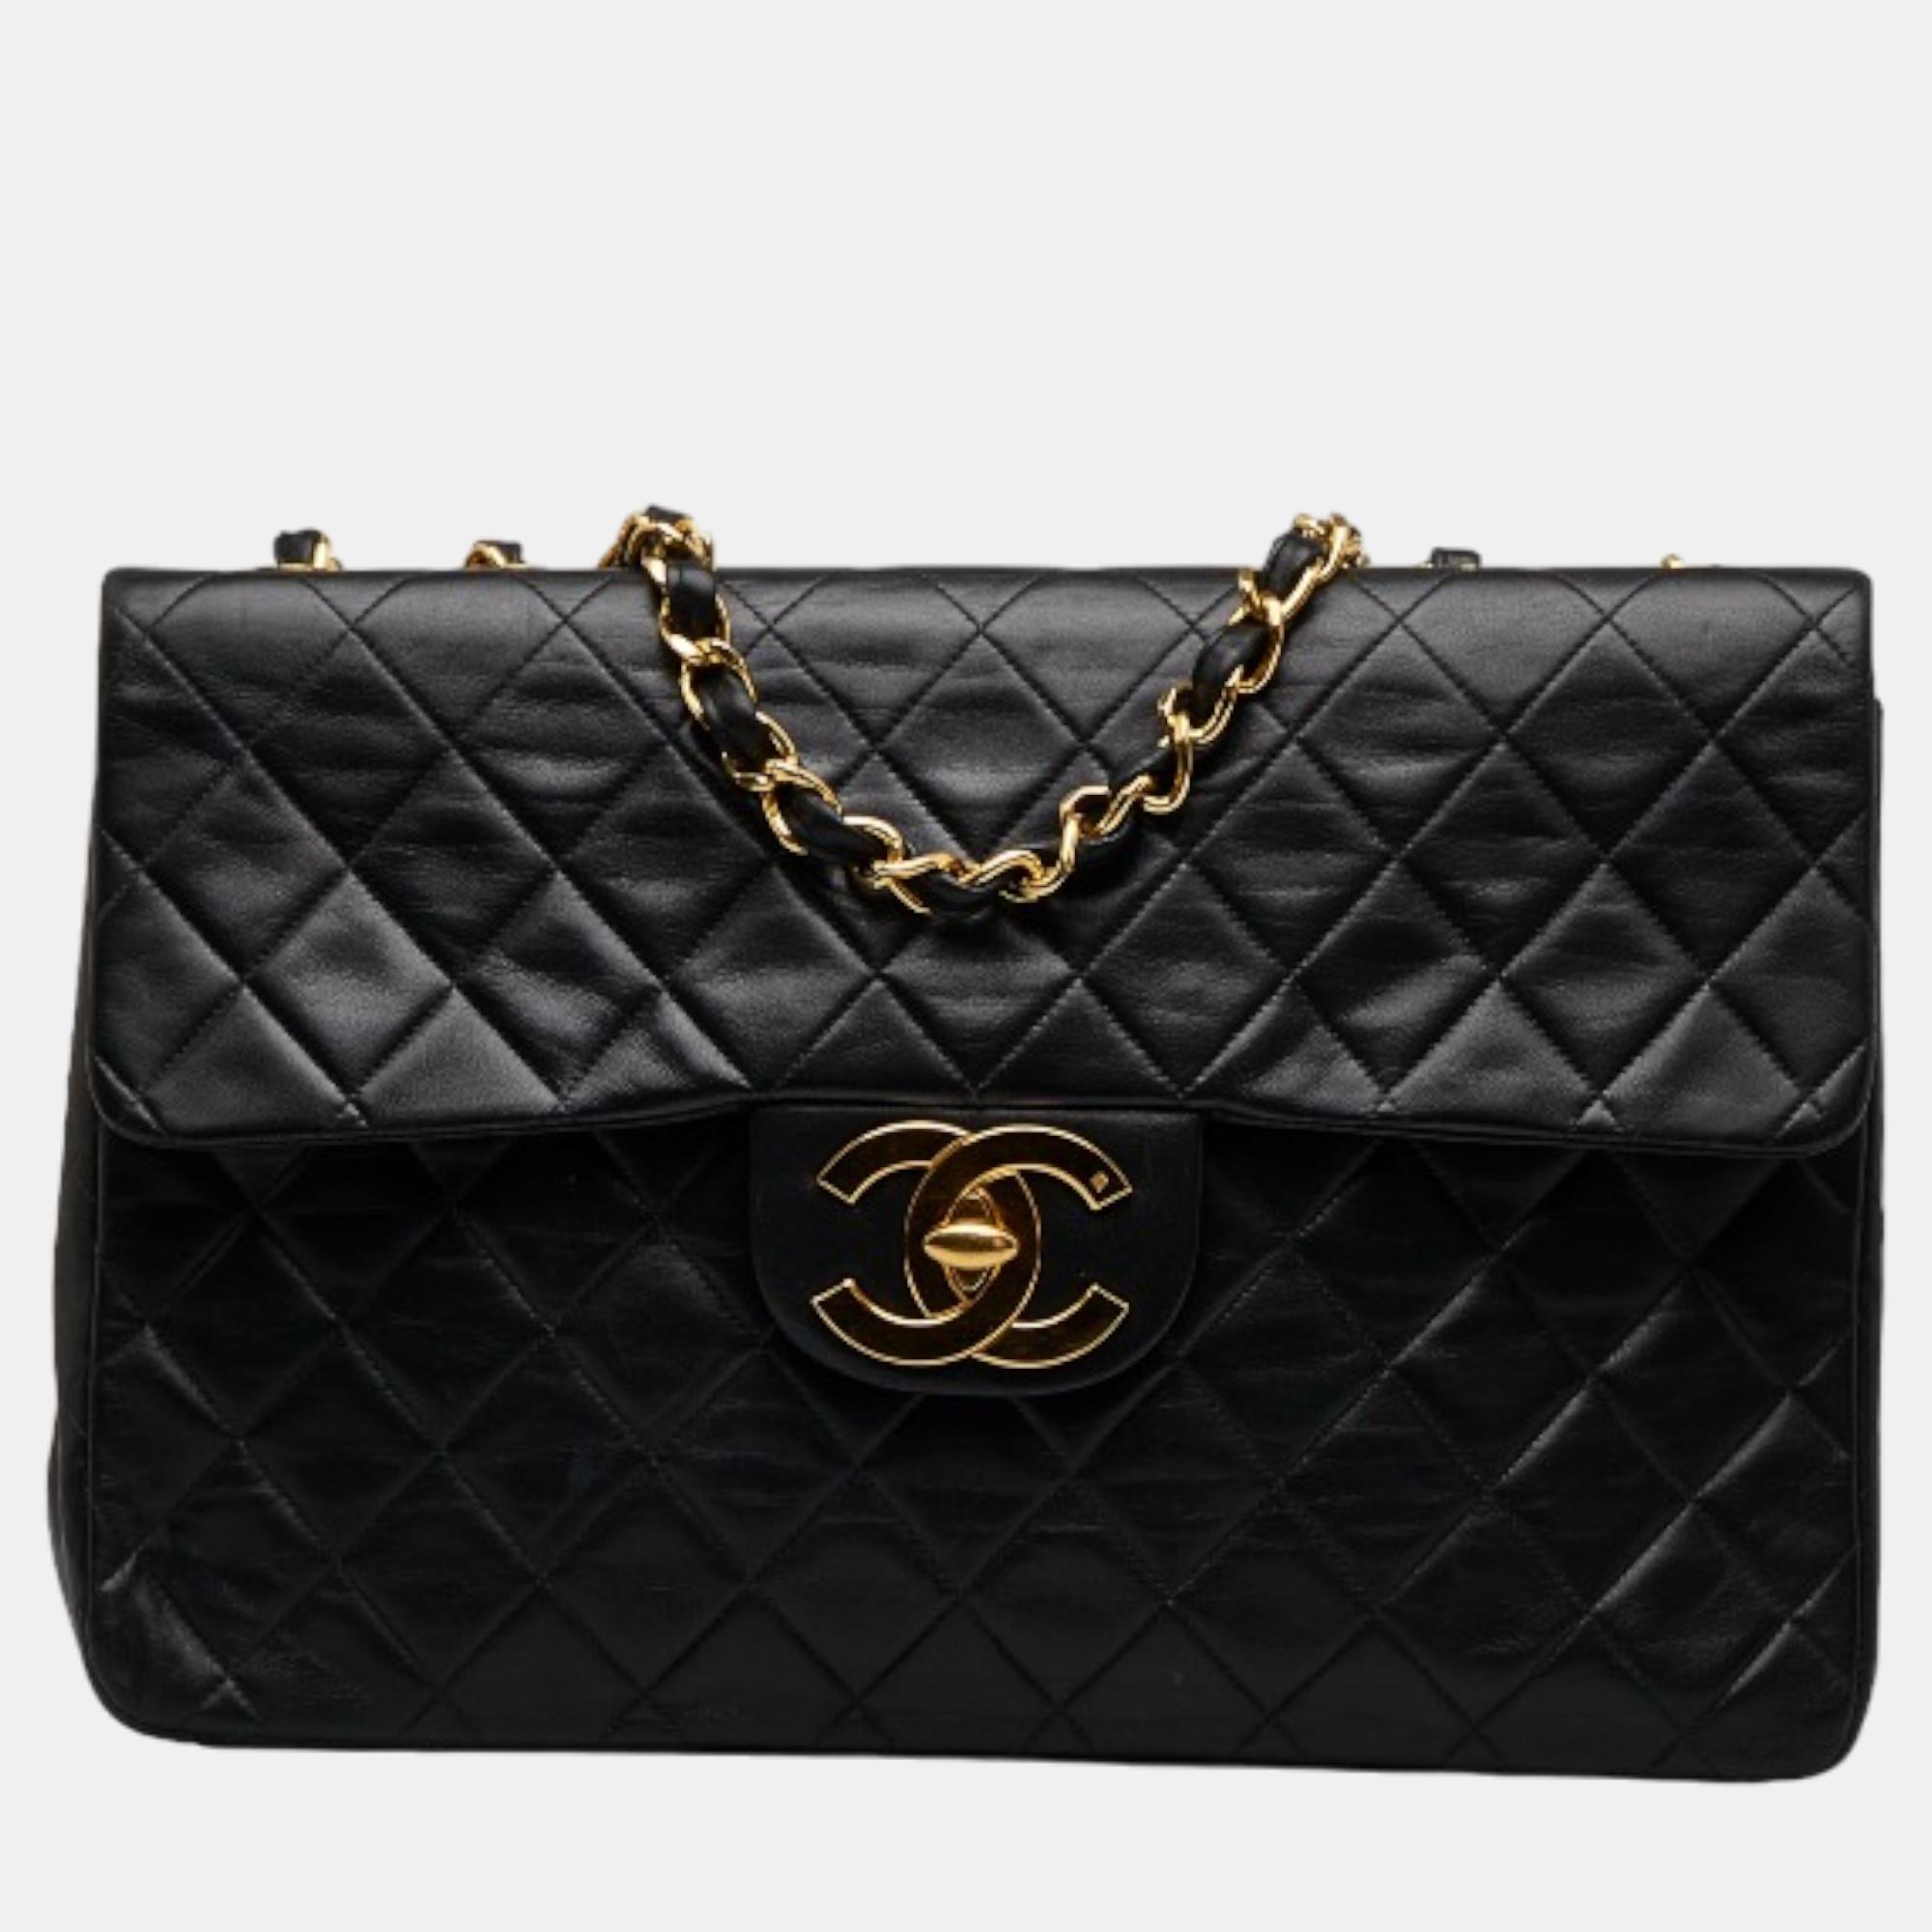 Chanel black leather maxi classic single flap bag